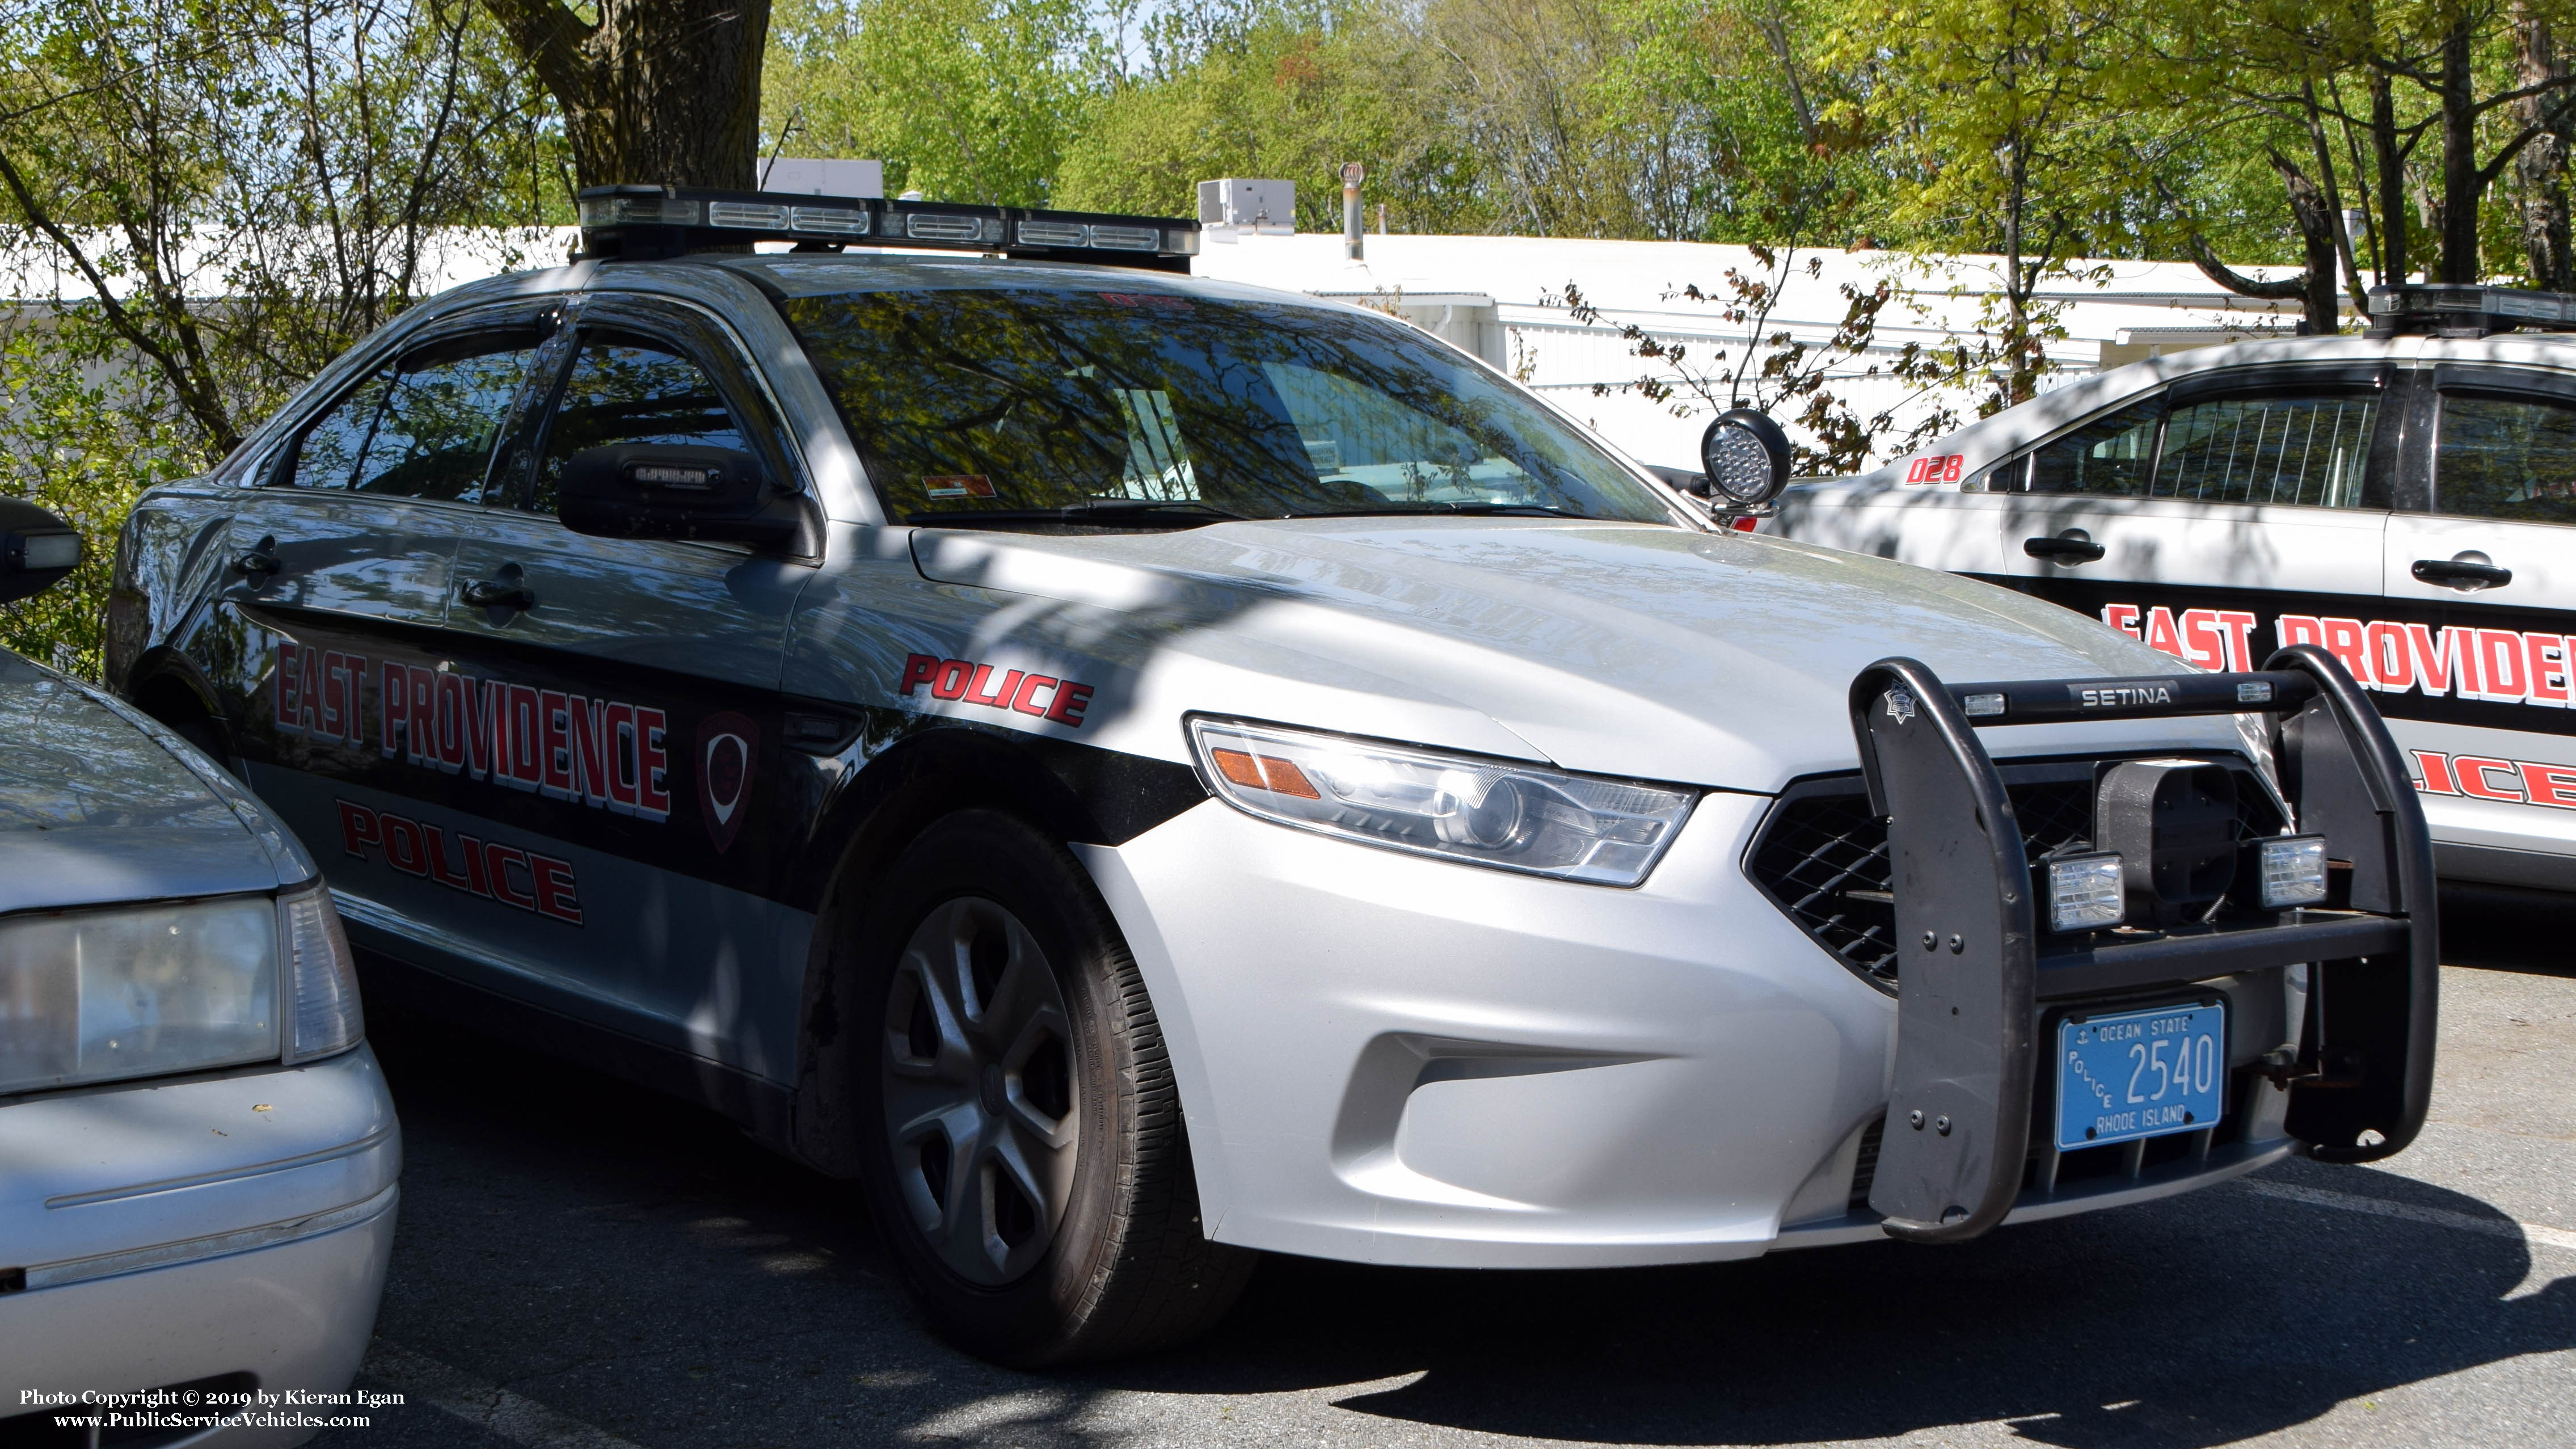 A photo  of East Providence Police
            Car 26, a 2013 Ford Police Interceptor Sedan             taken by Kieran Egan